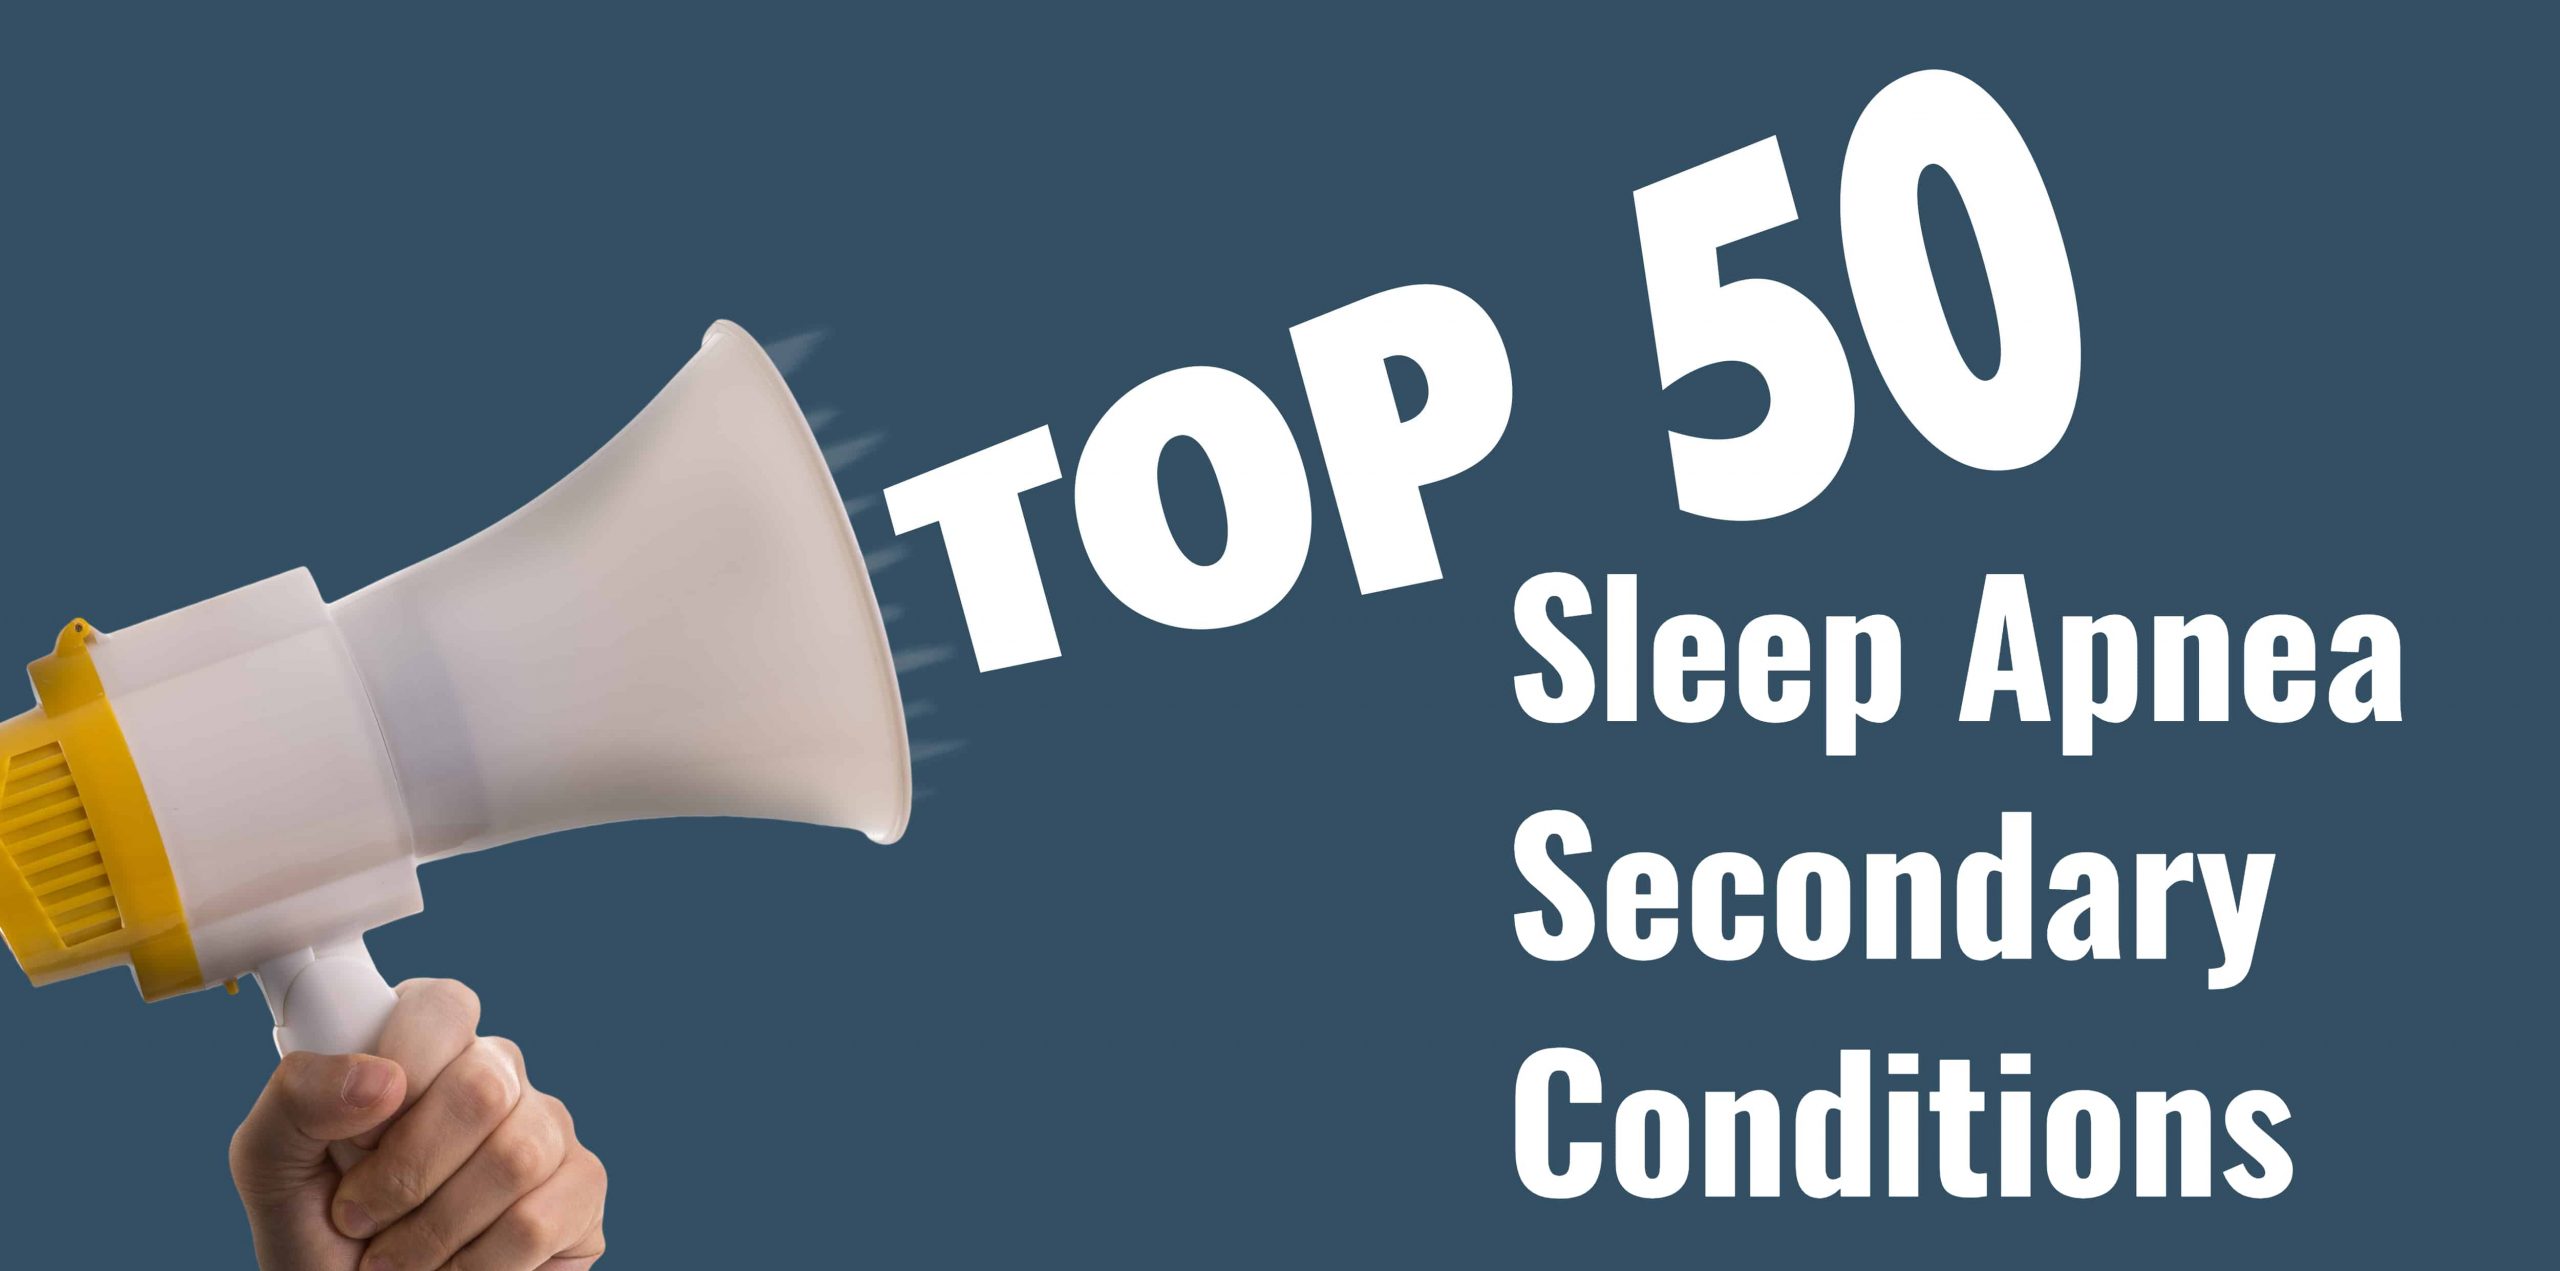 List of 50+ Sleep Apnea Secondary Conditions